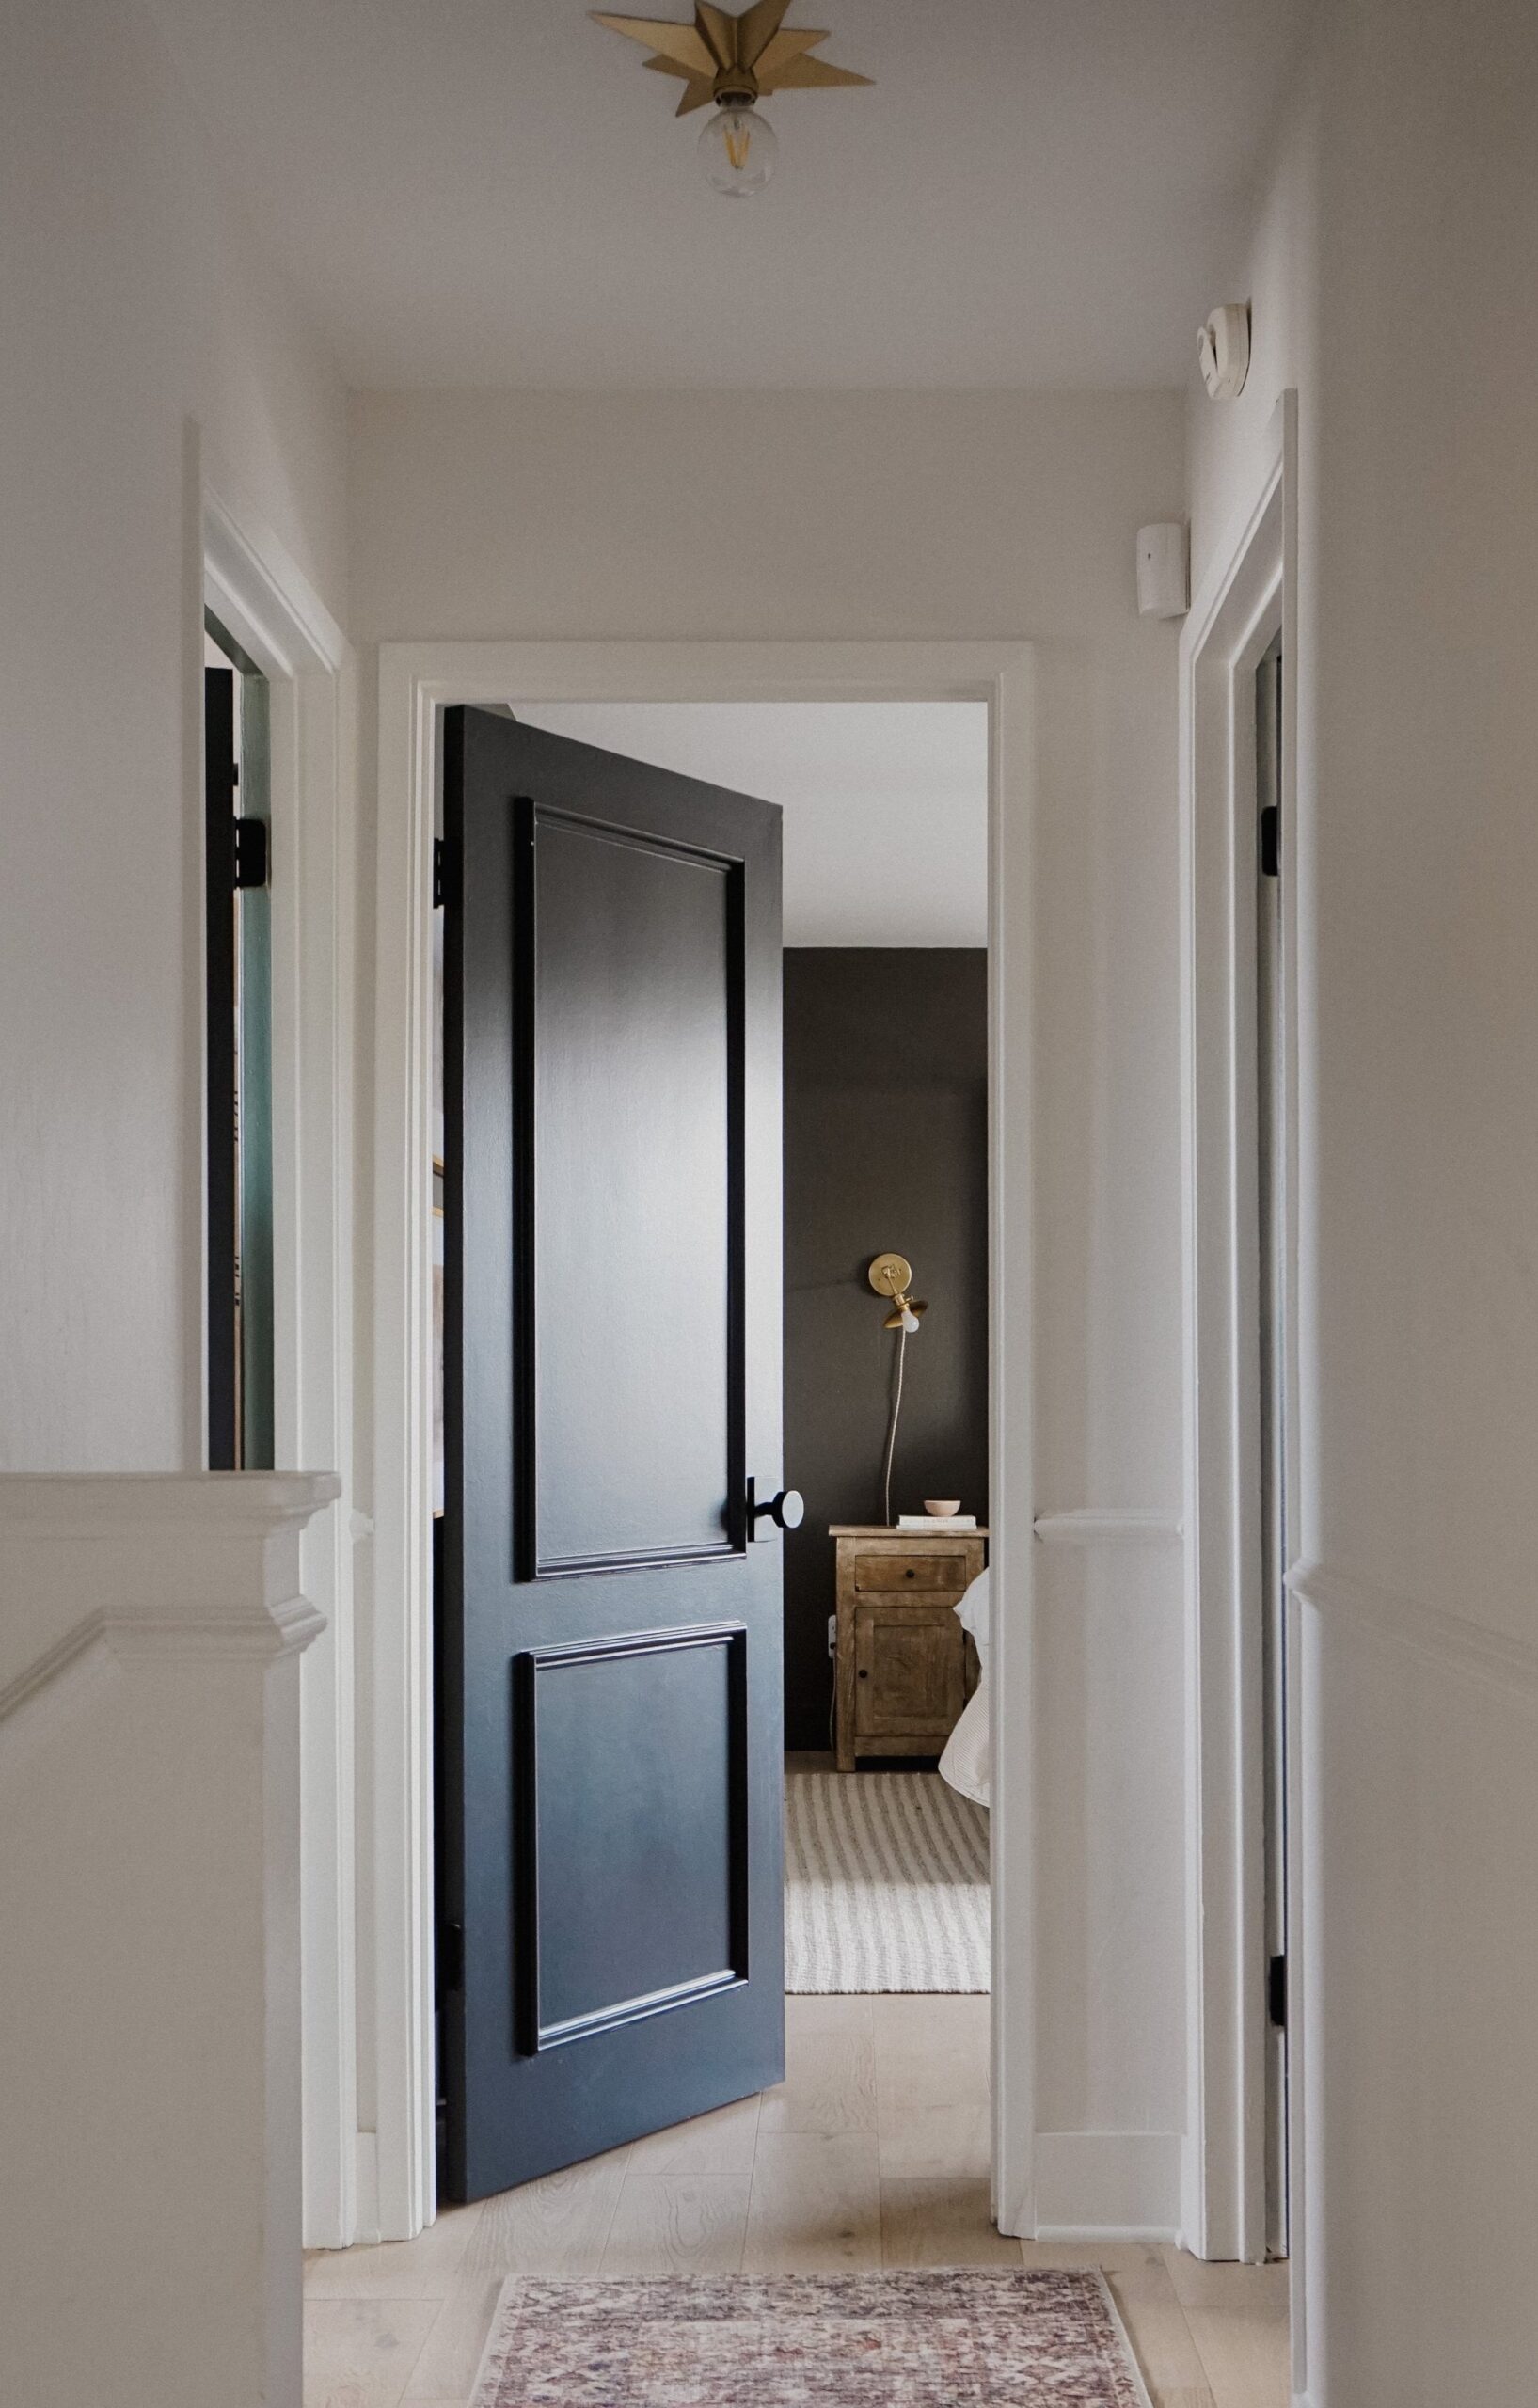 Elegant dark door featuring architectural details in trims